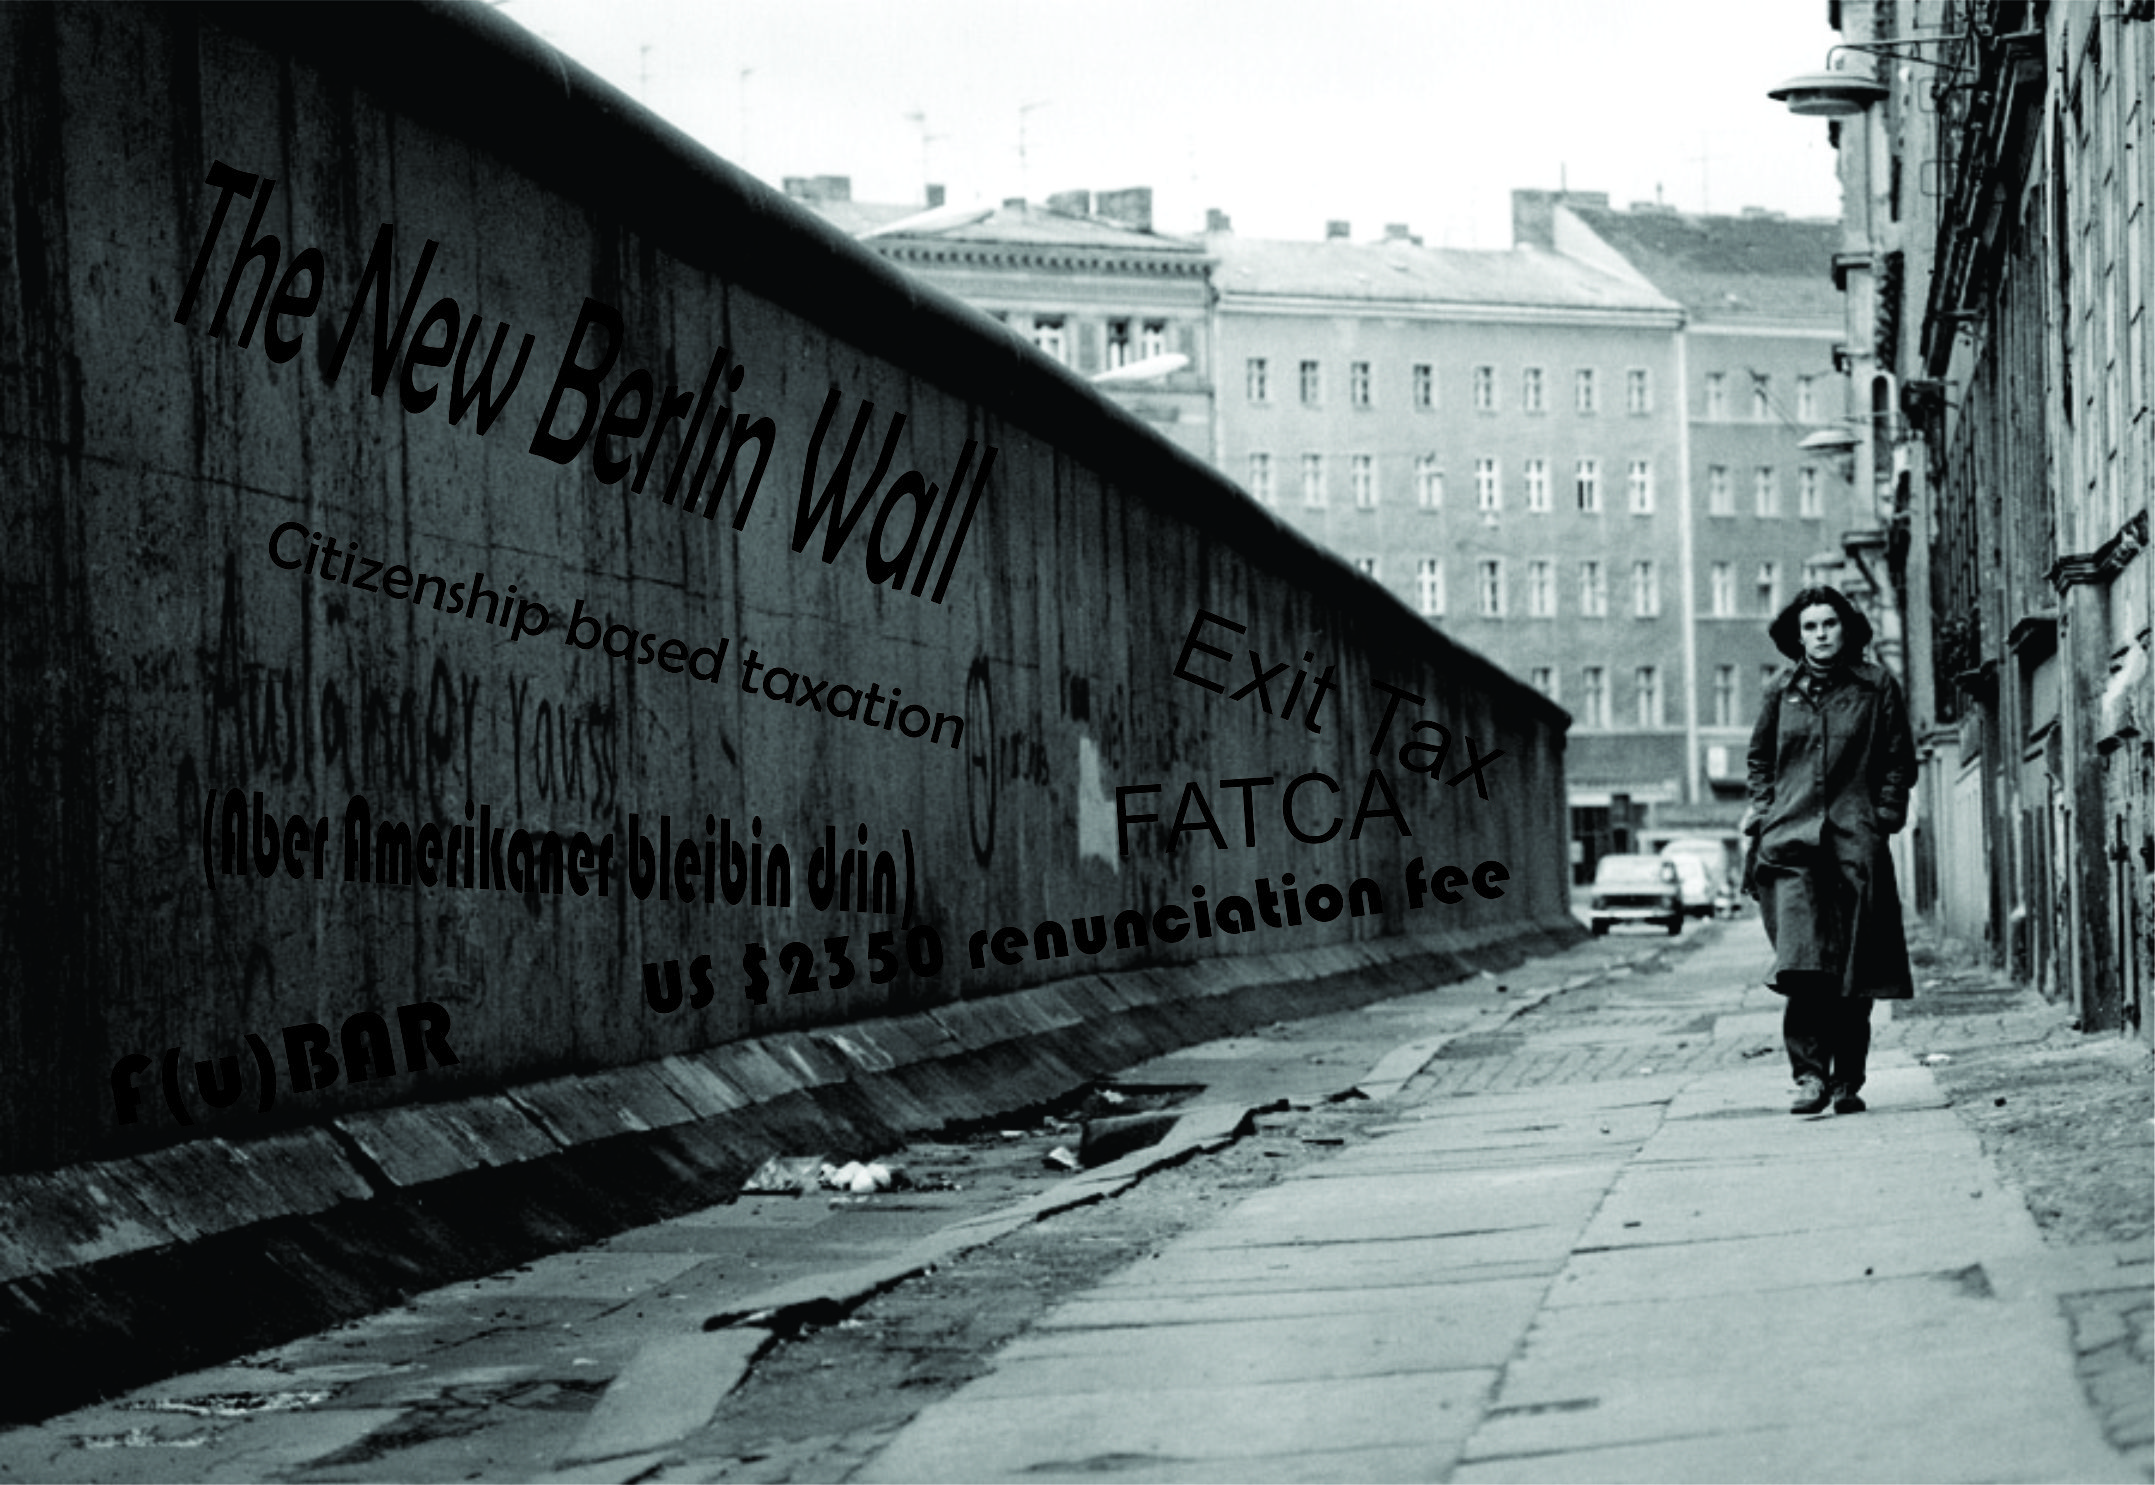 New Berlin Wall